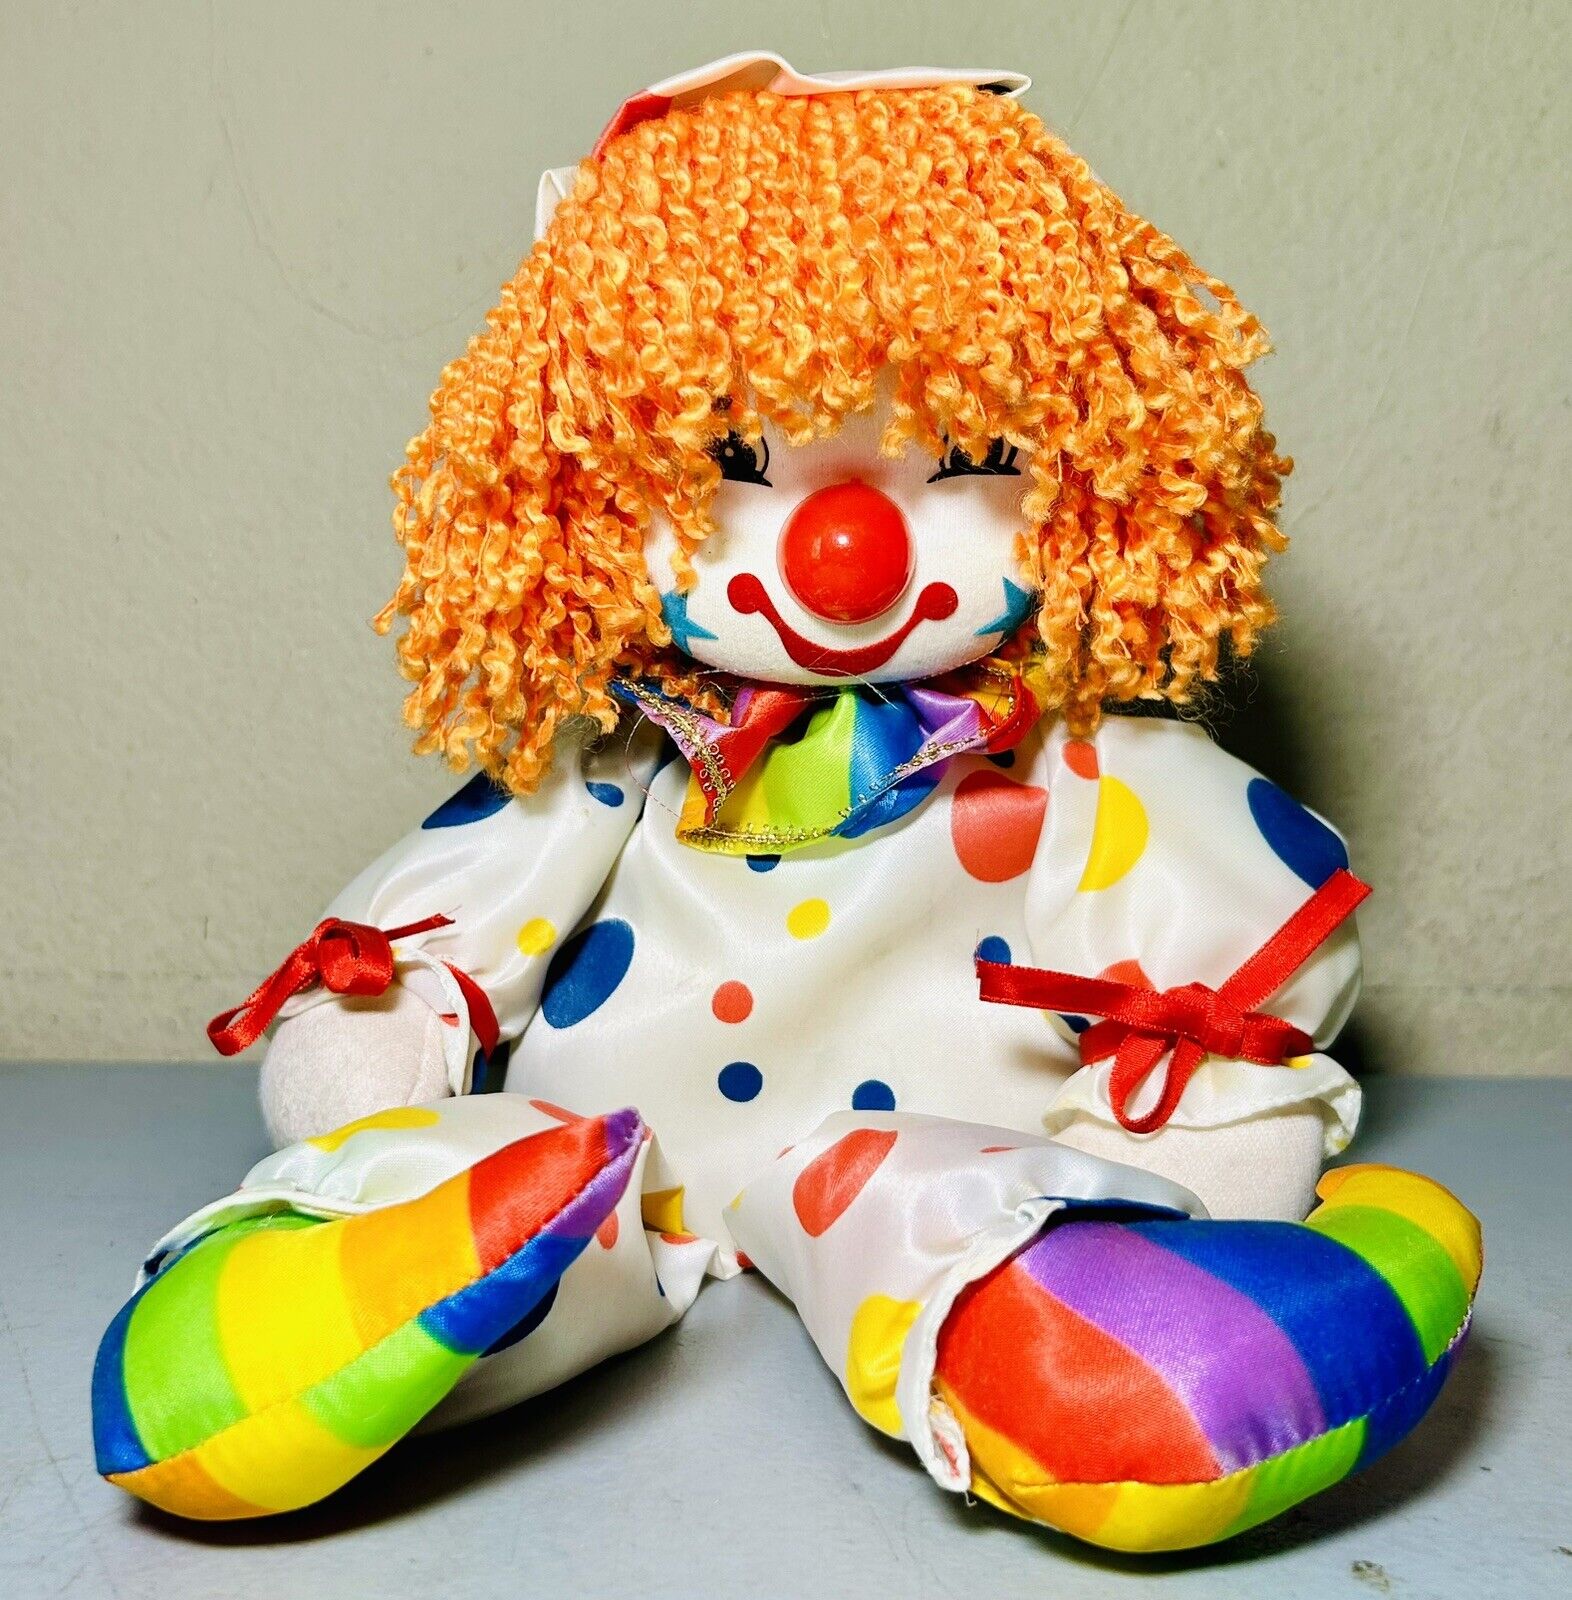 Vintage Brenden Musical Clown Doll Music Box Play “It’s a Small World” Polka Dot